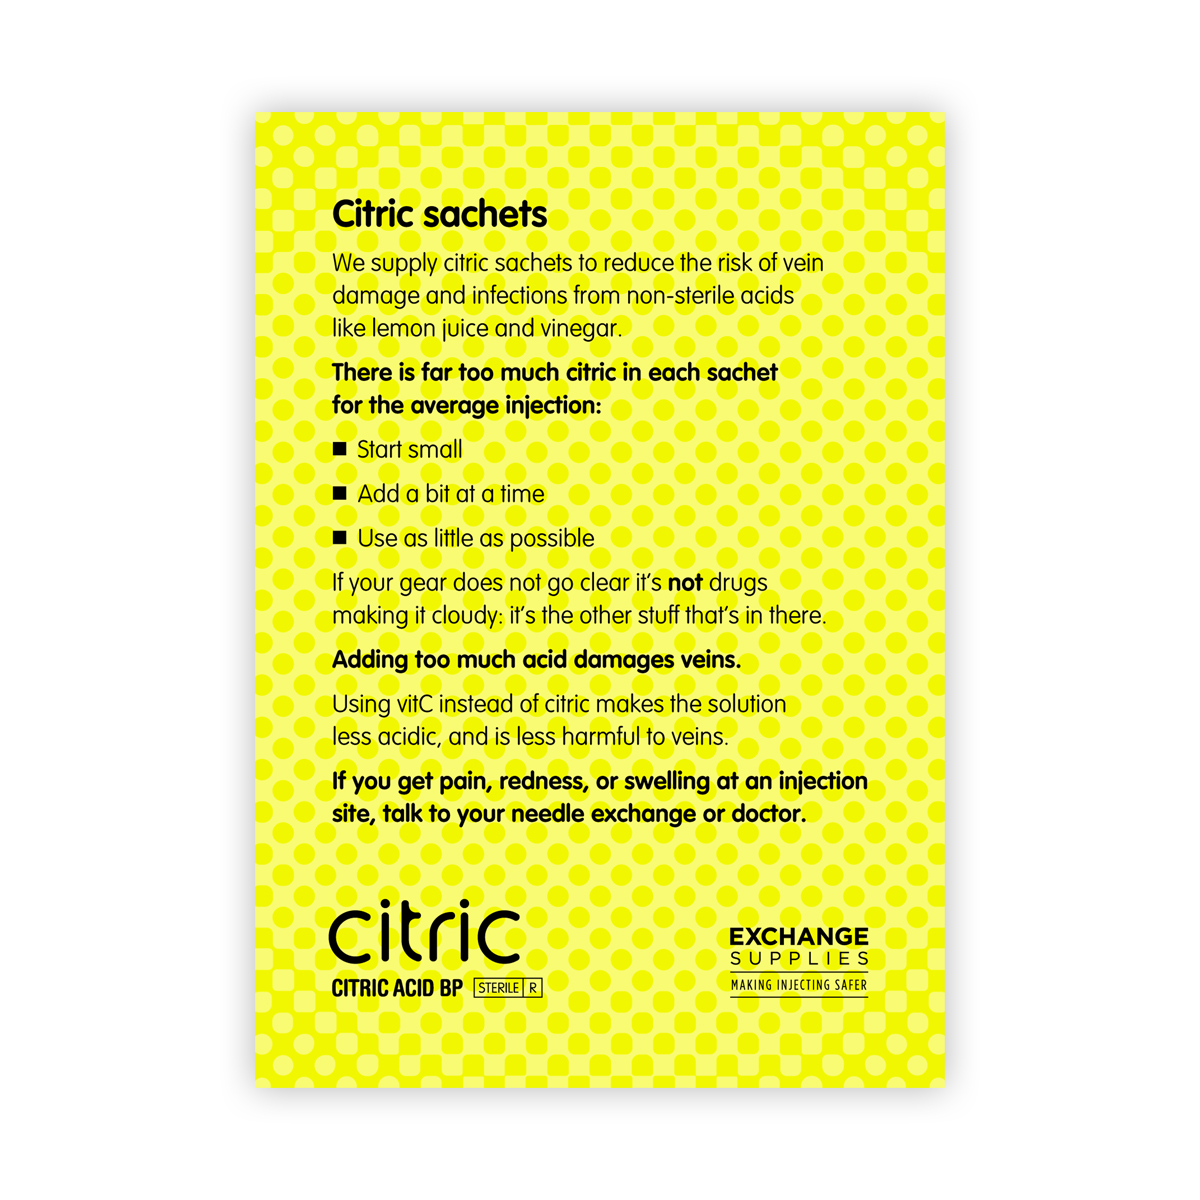 Citric leaflet